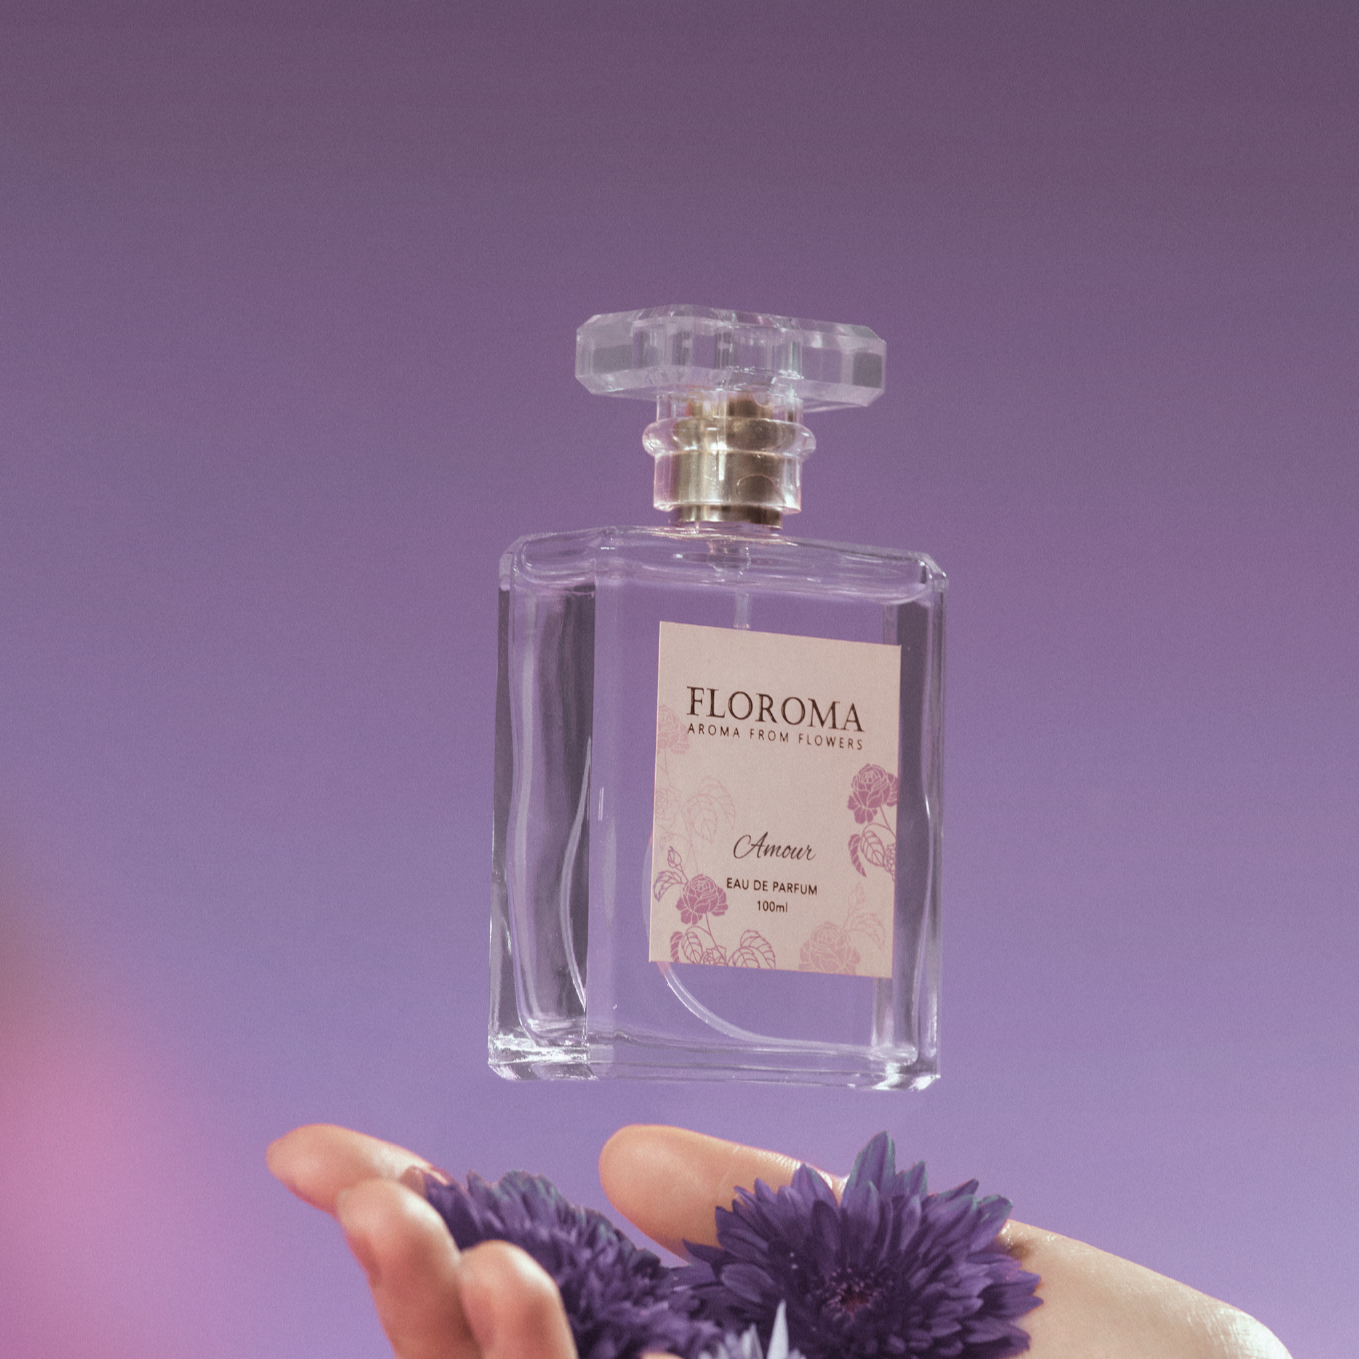 紫玫瑰香水《愛 Amour》